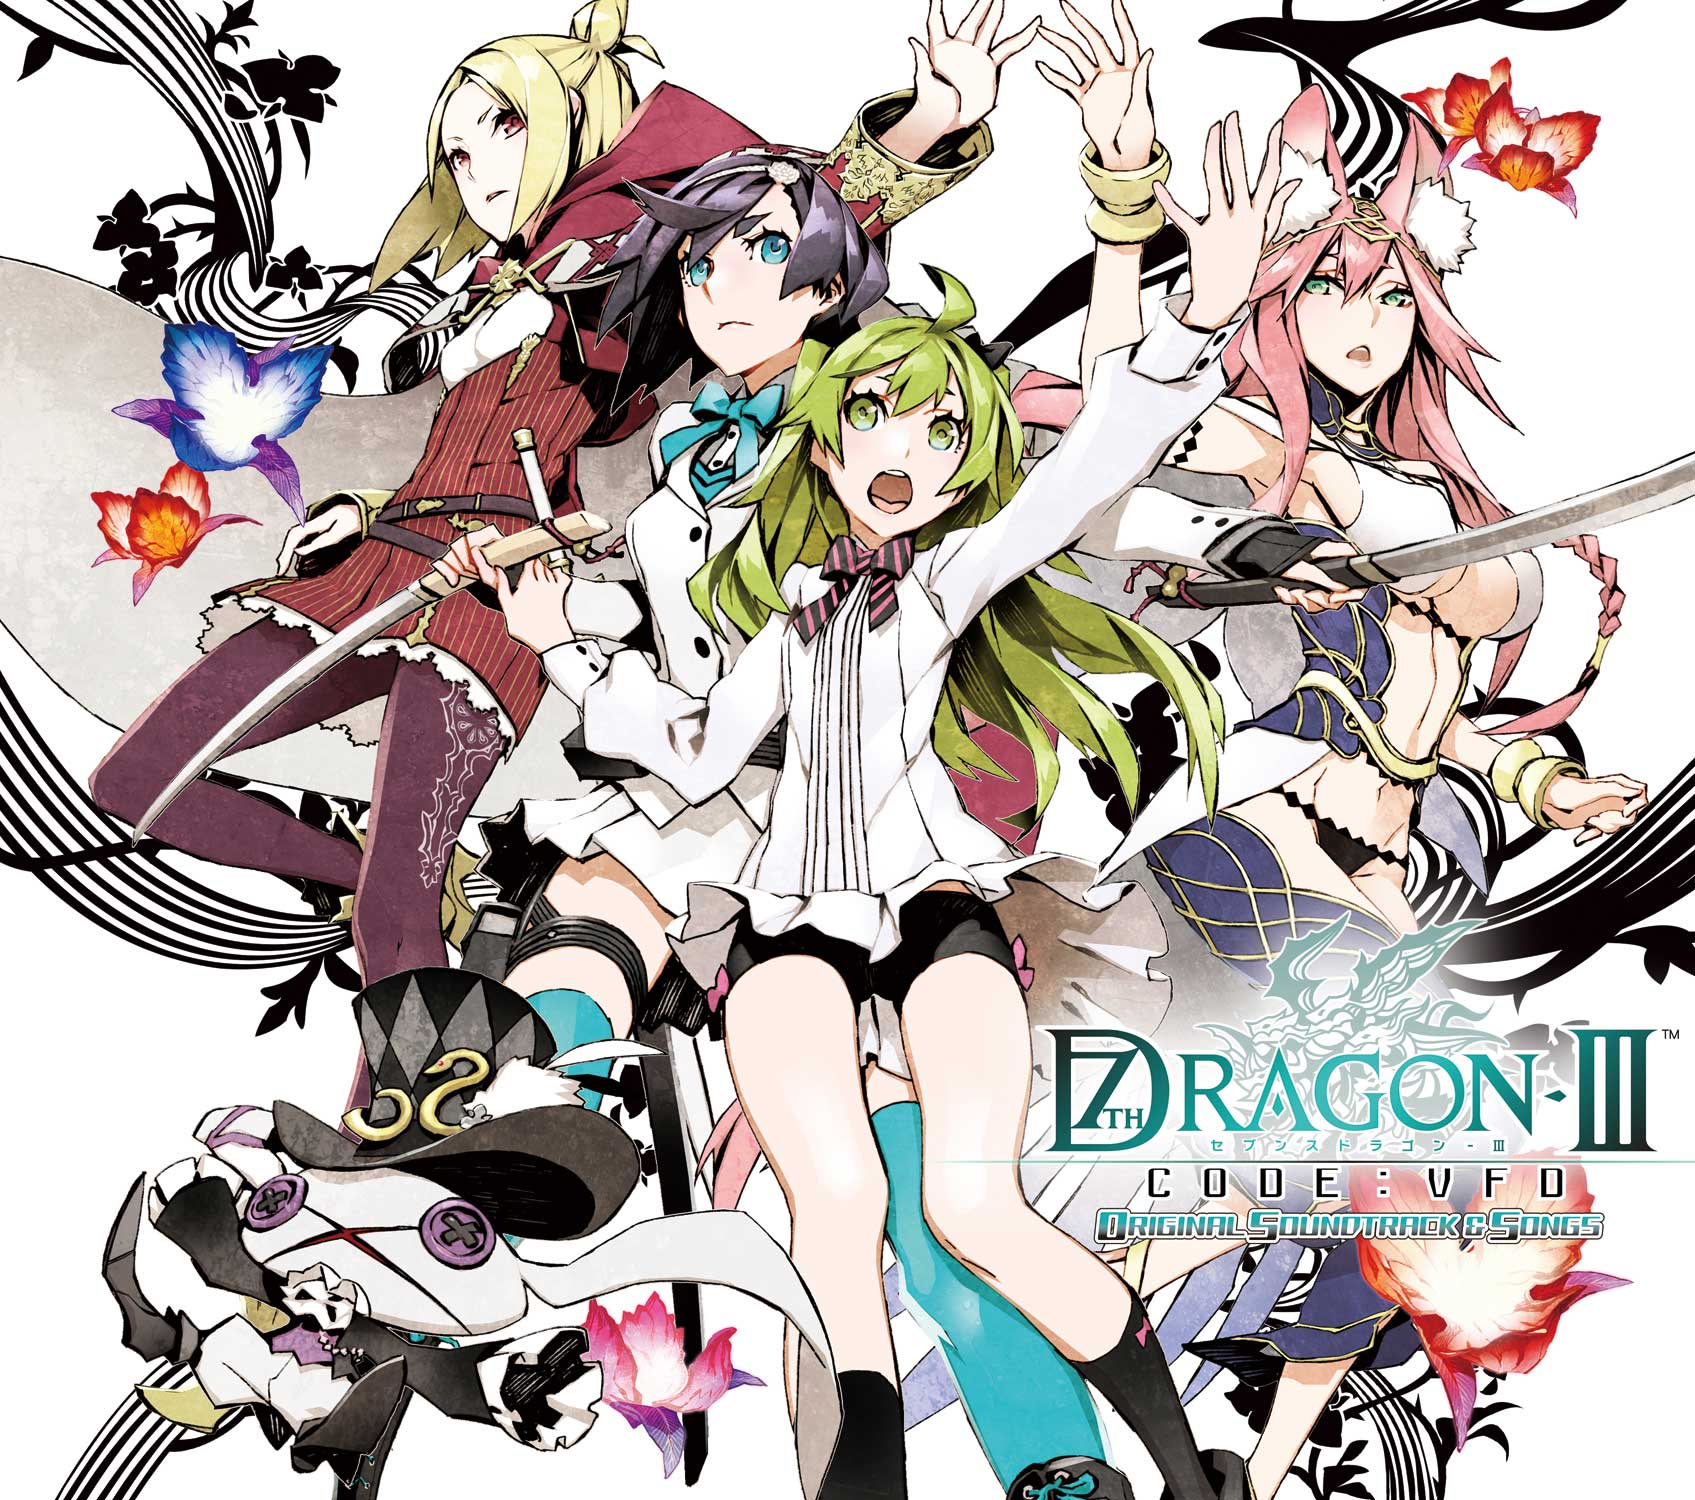 7th Dragon III Code VFD Original Soundtrack Songs